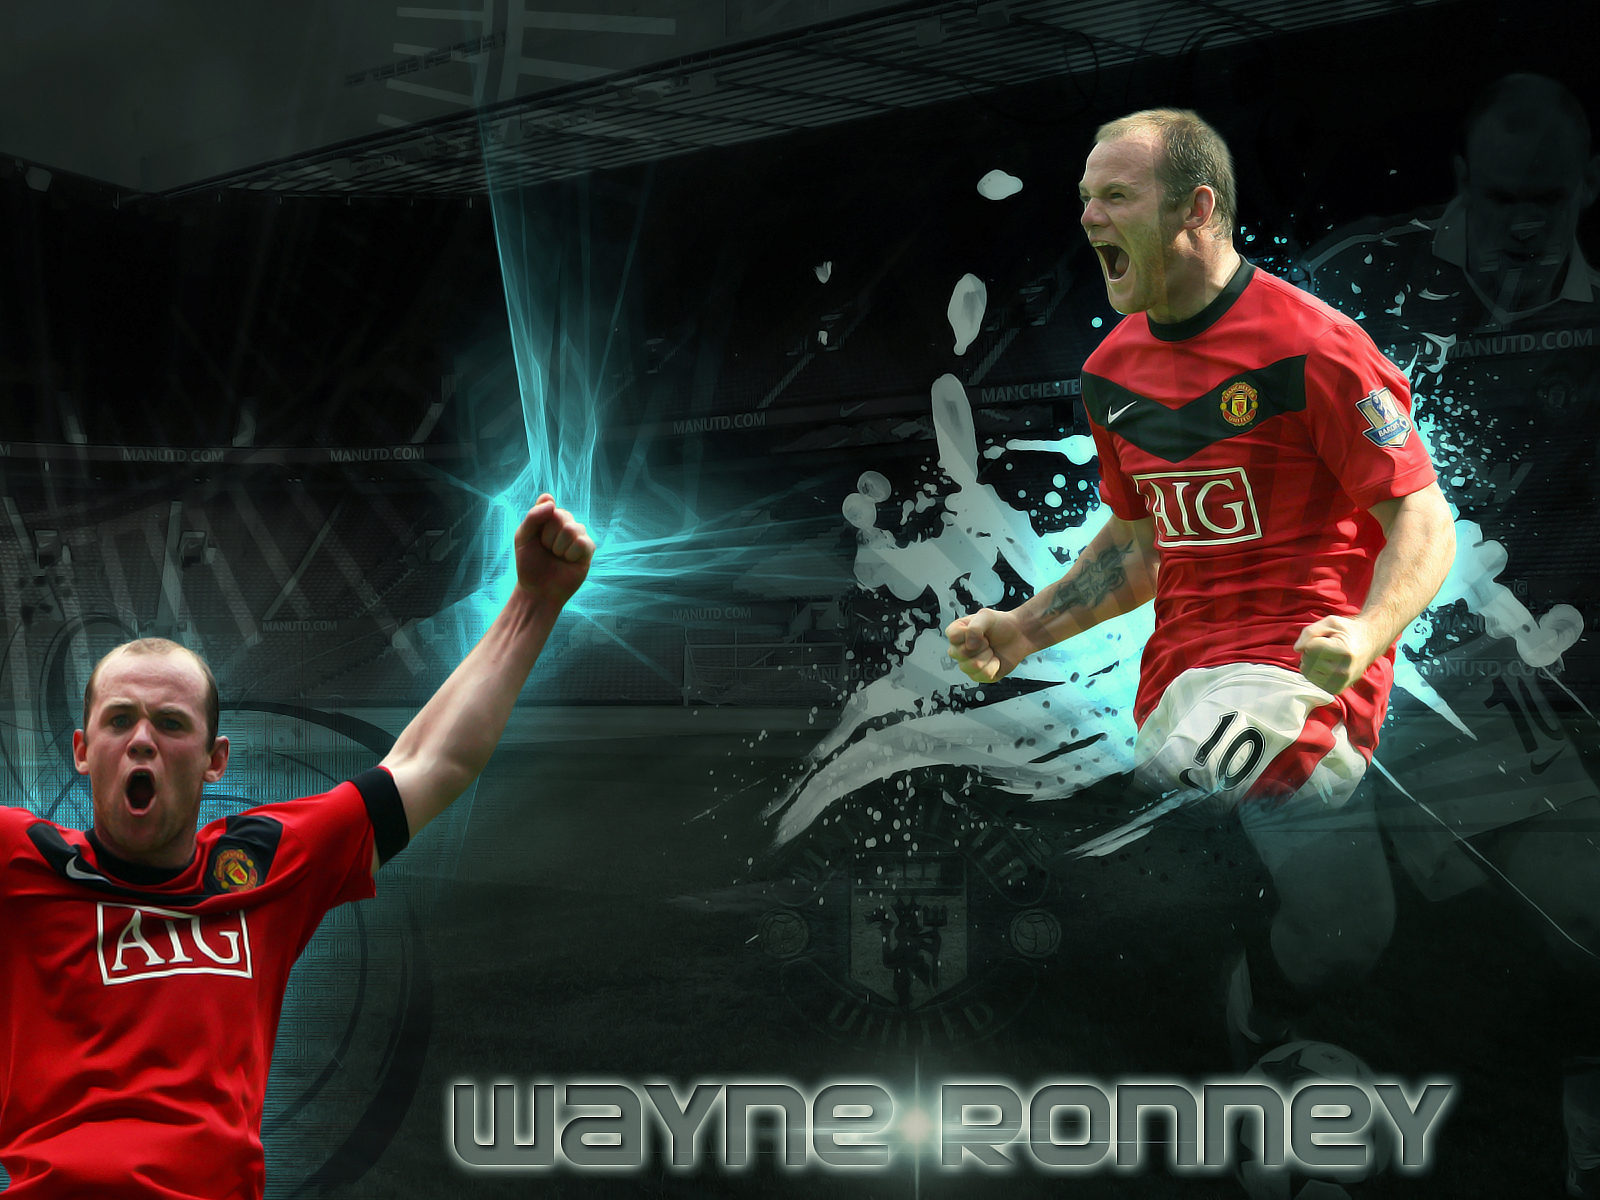 The forward of Manchester United Wayne Rooney on dark background Desktop  wallpapers 1280x720